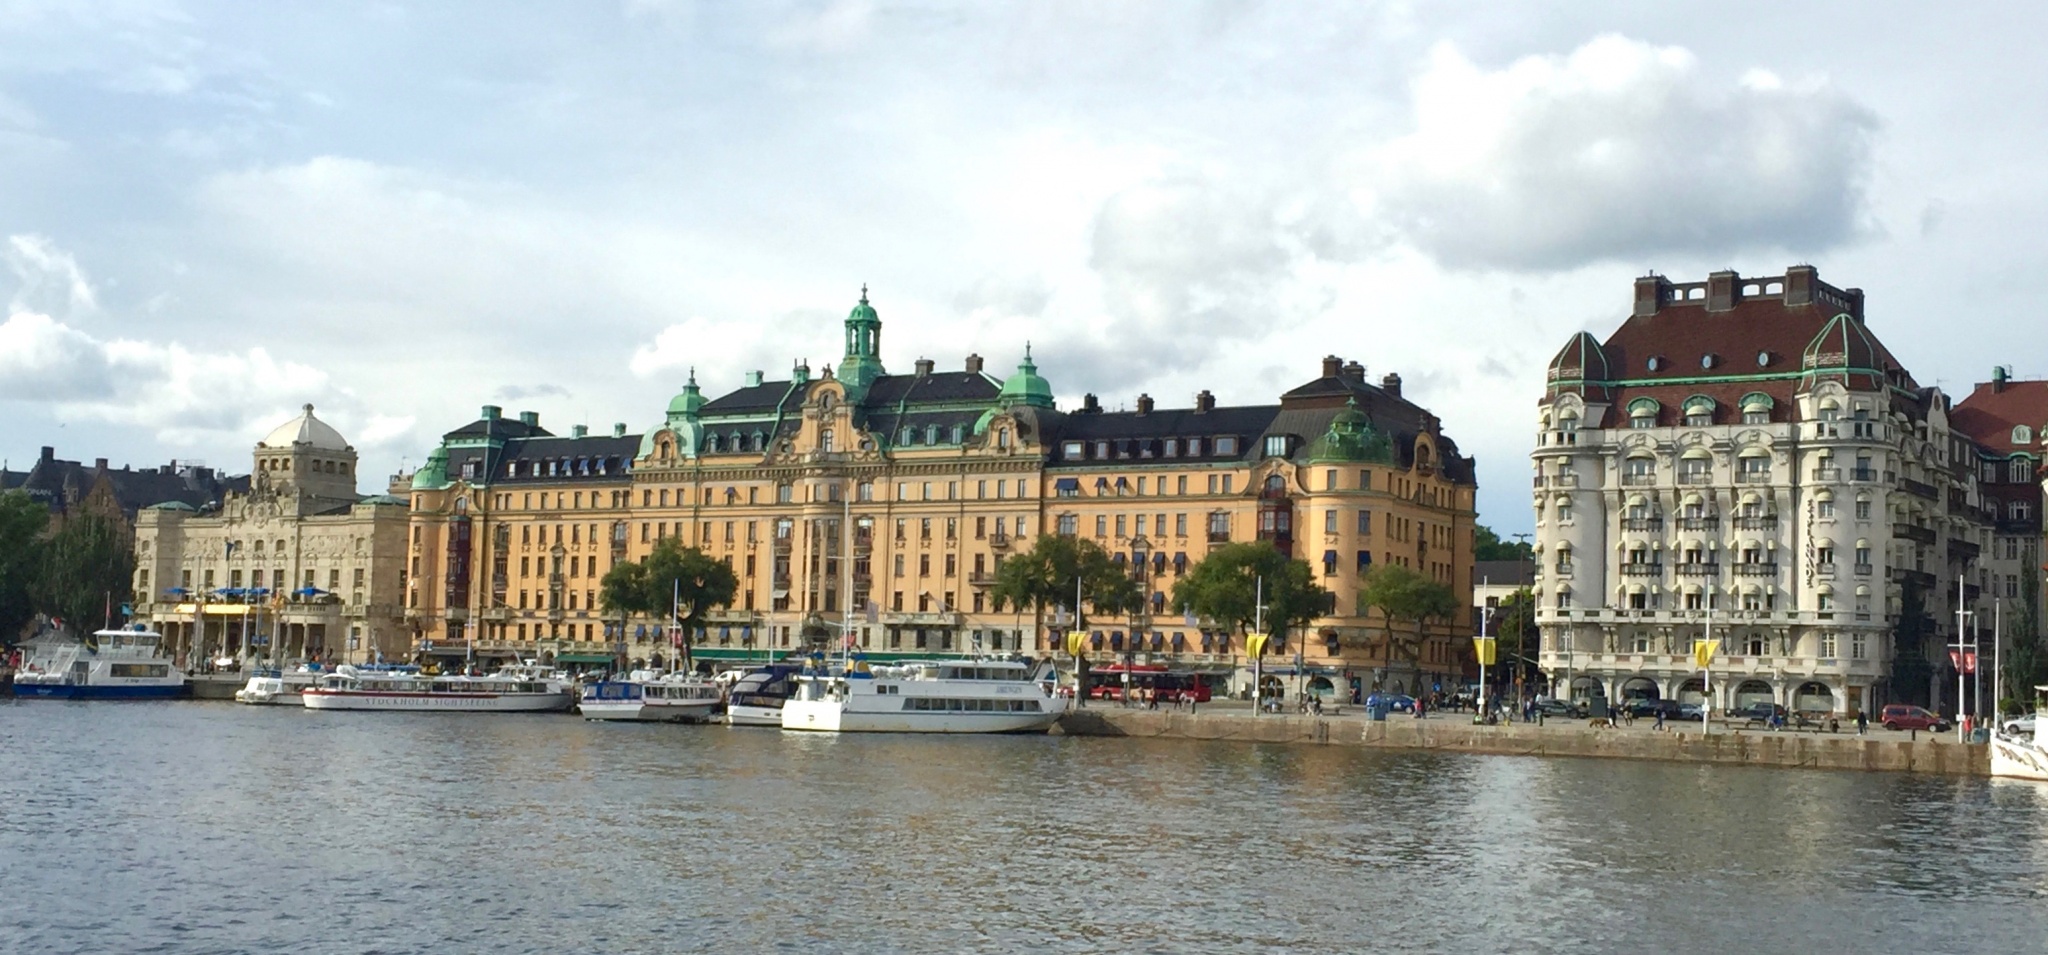 View of Strandvägen in Stockholm